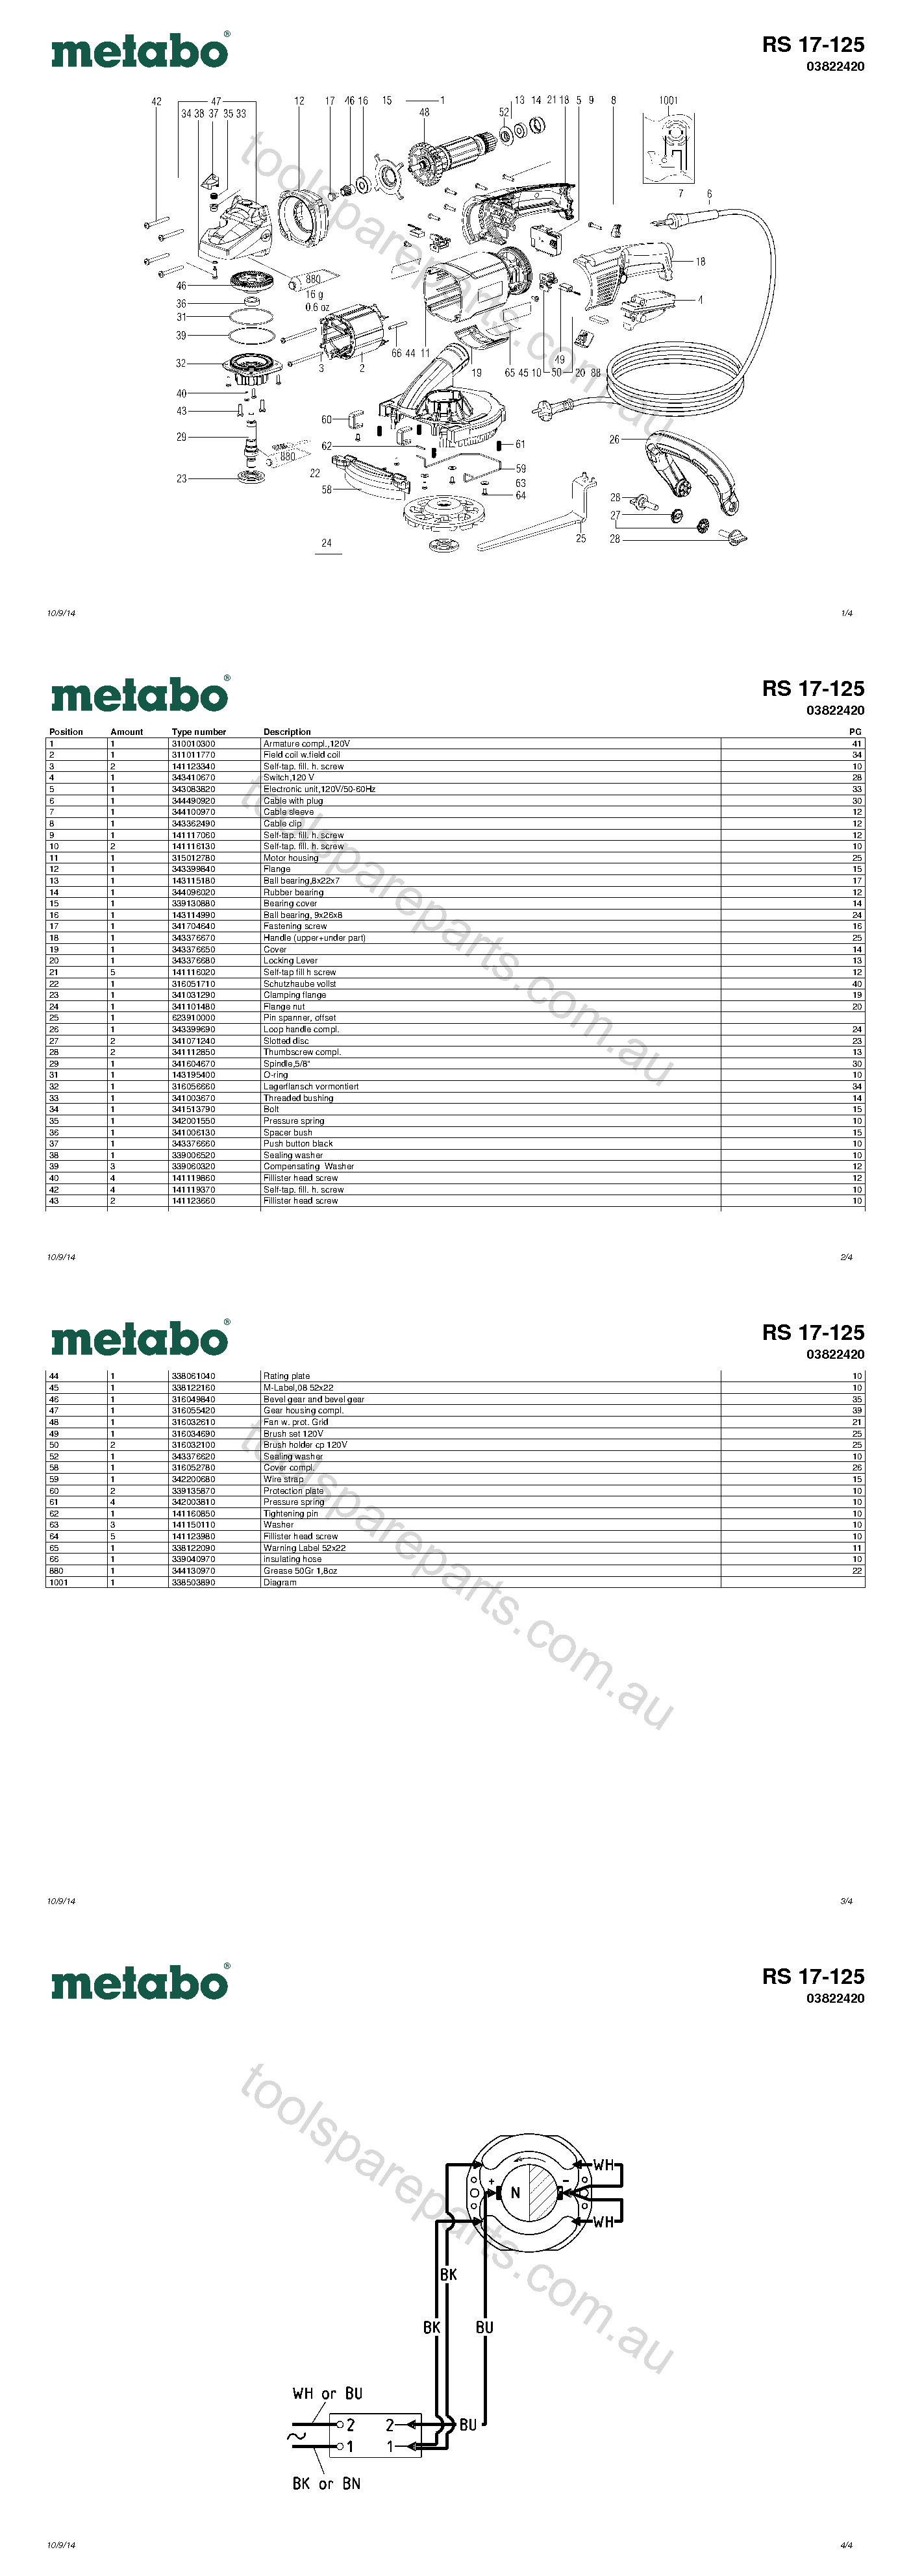 Metabo RS 17-125 03822420  Diagram 1